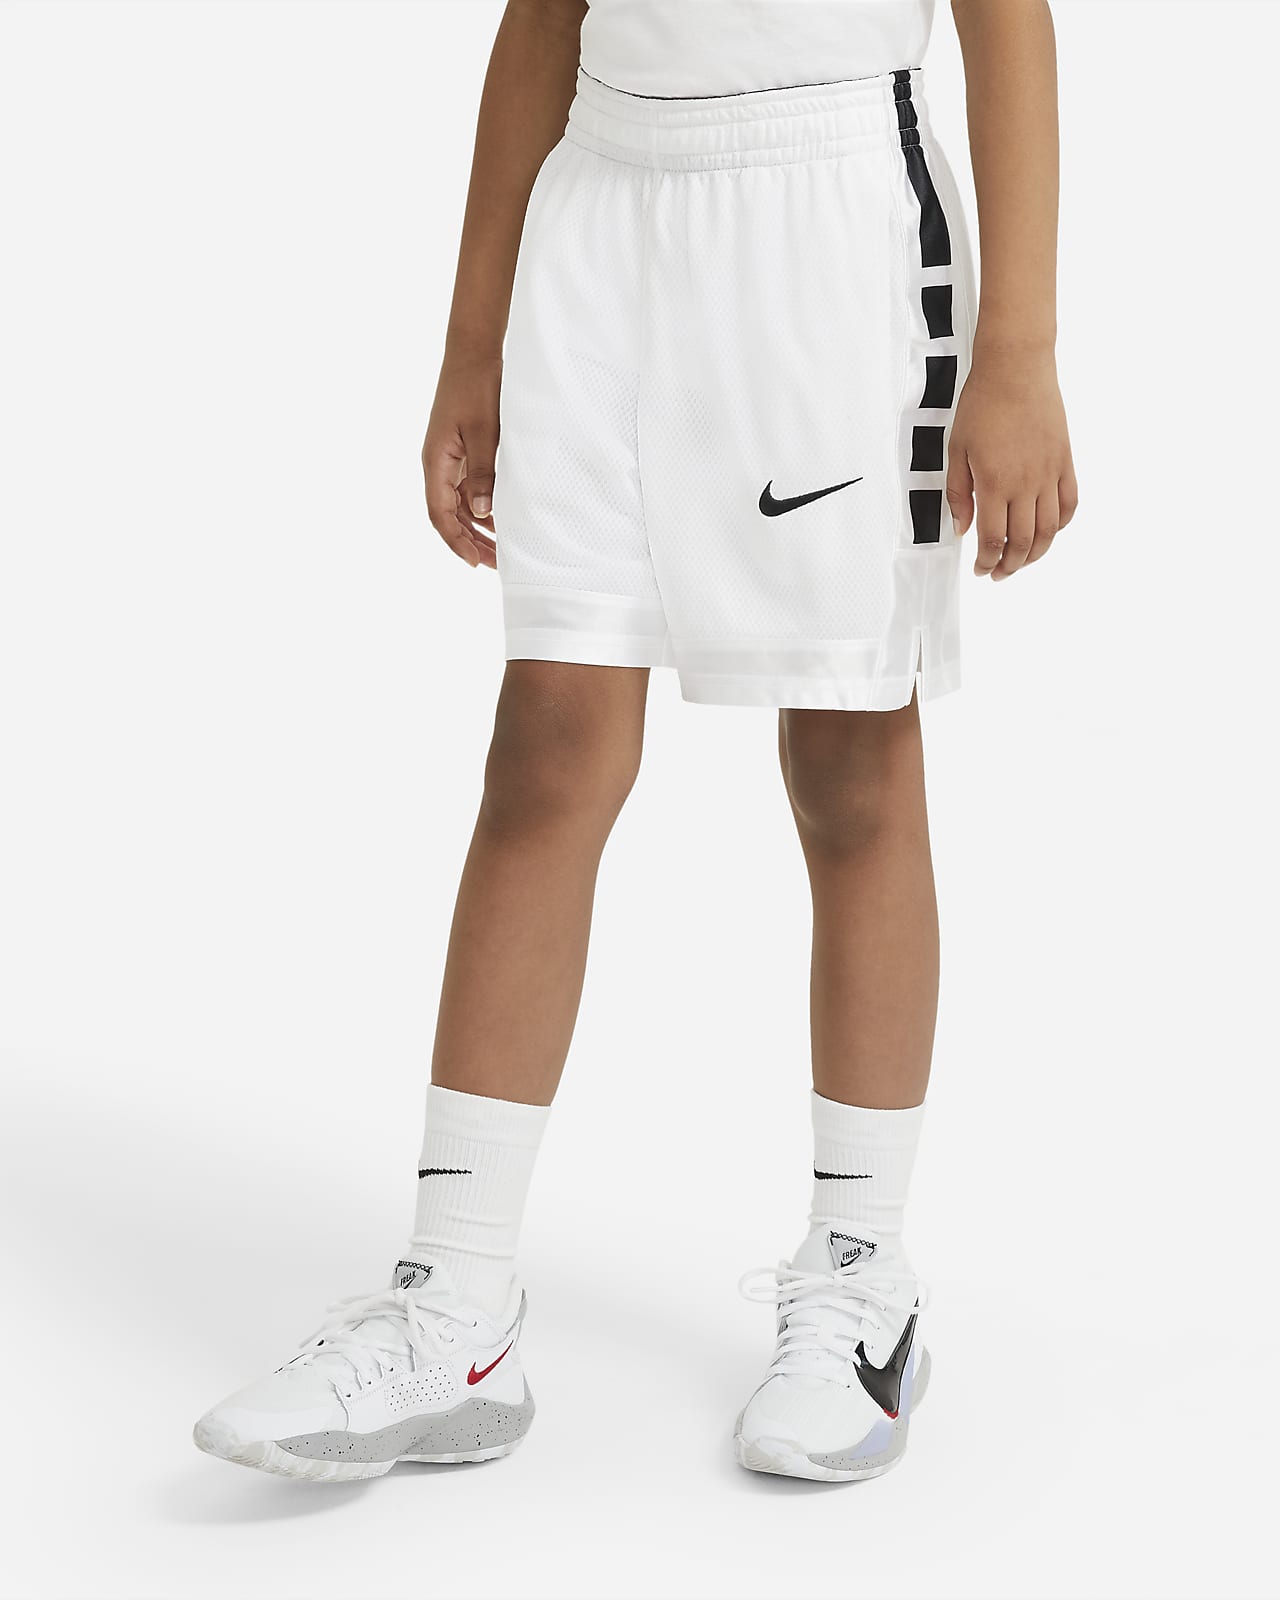 diep Uitdaging Vochtig Nike Dri-FIT Elite Big Kids' (Boys') Basketball Shorts. Nike.com